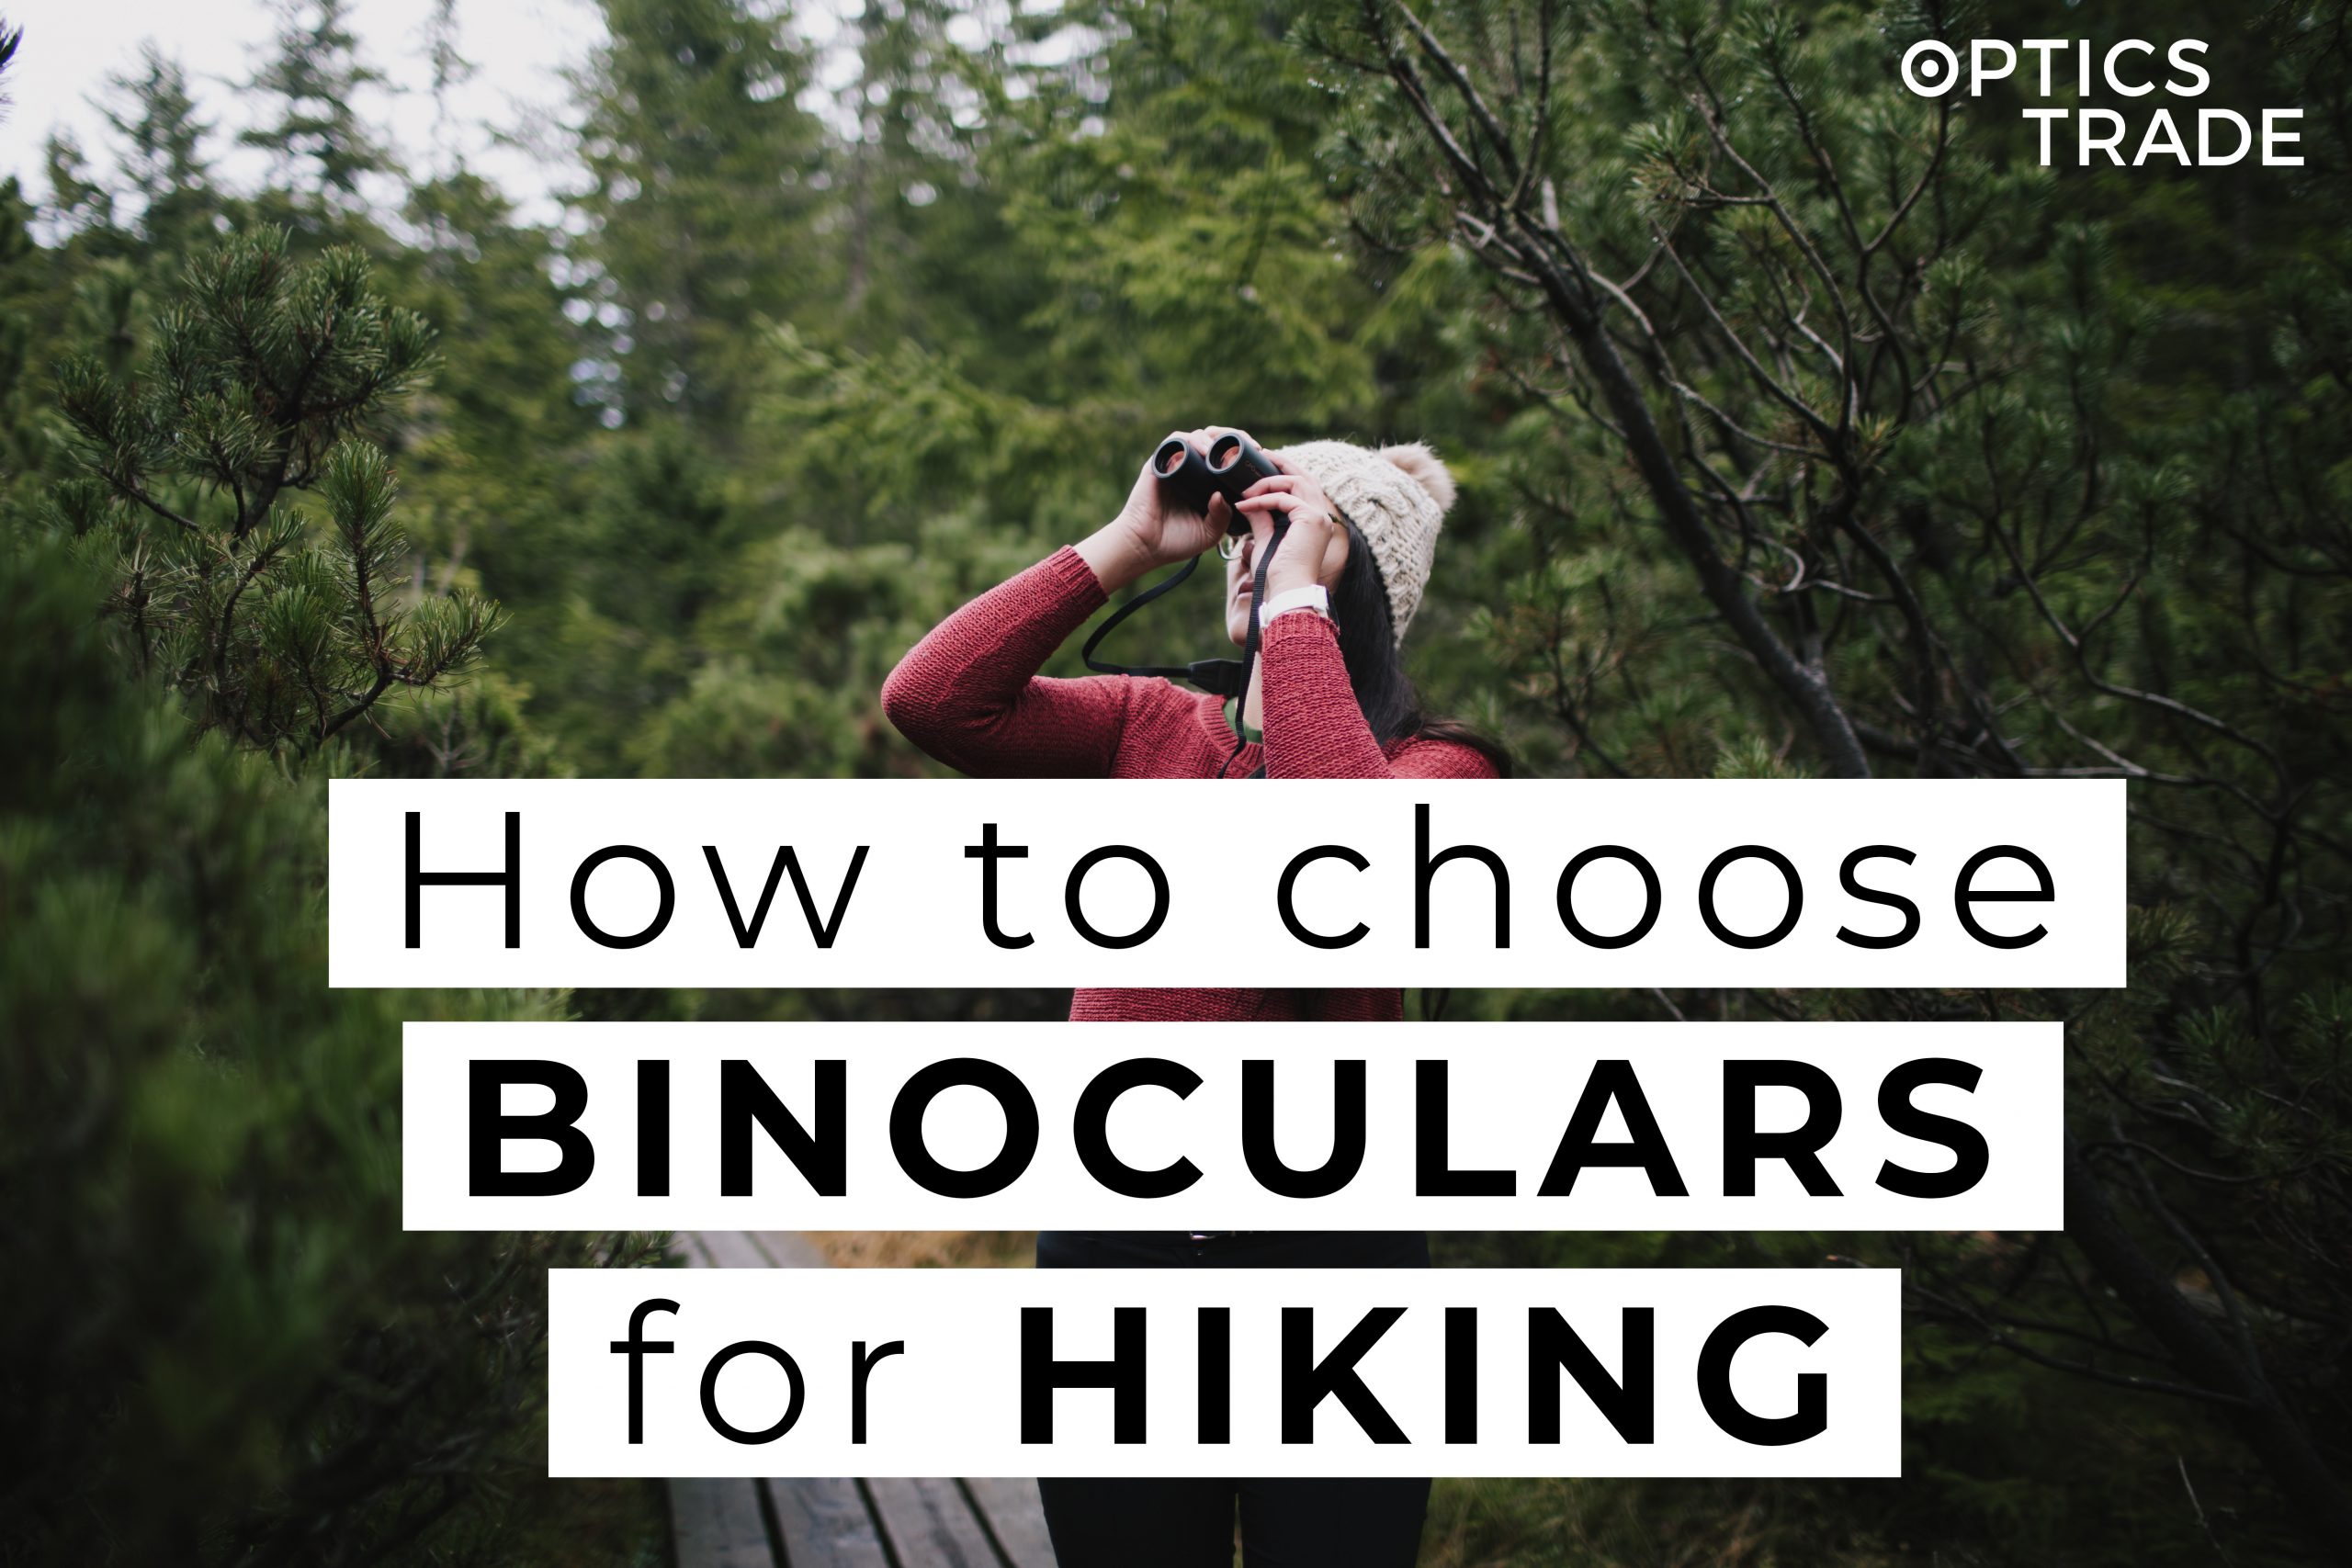 Hiking binoculars – how to choose them?